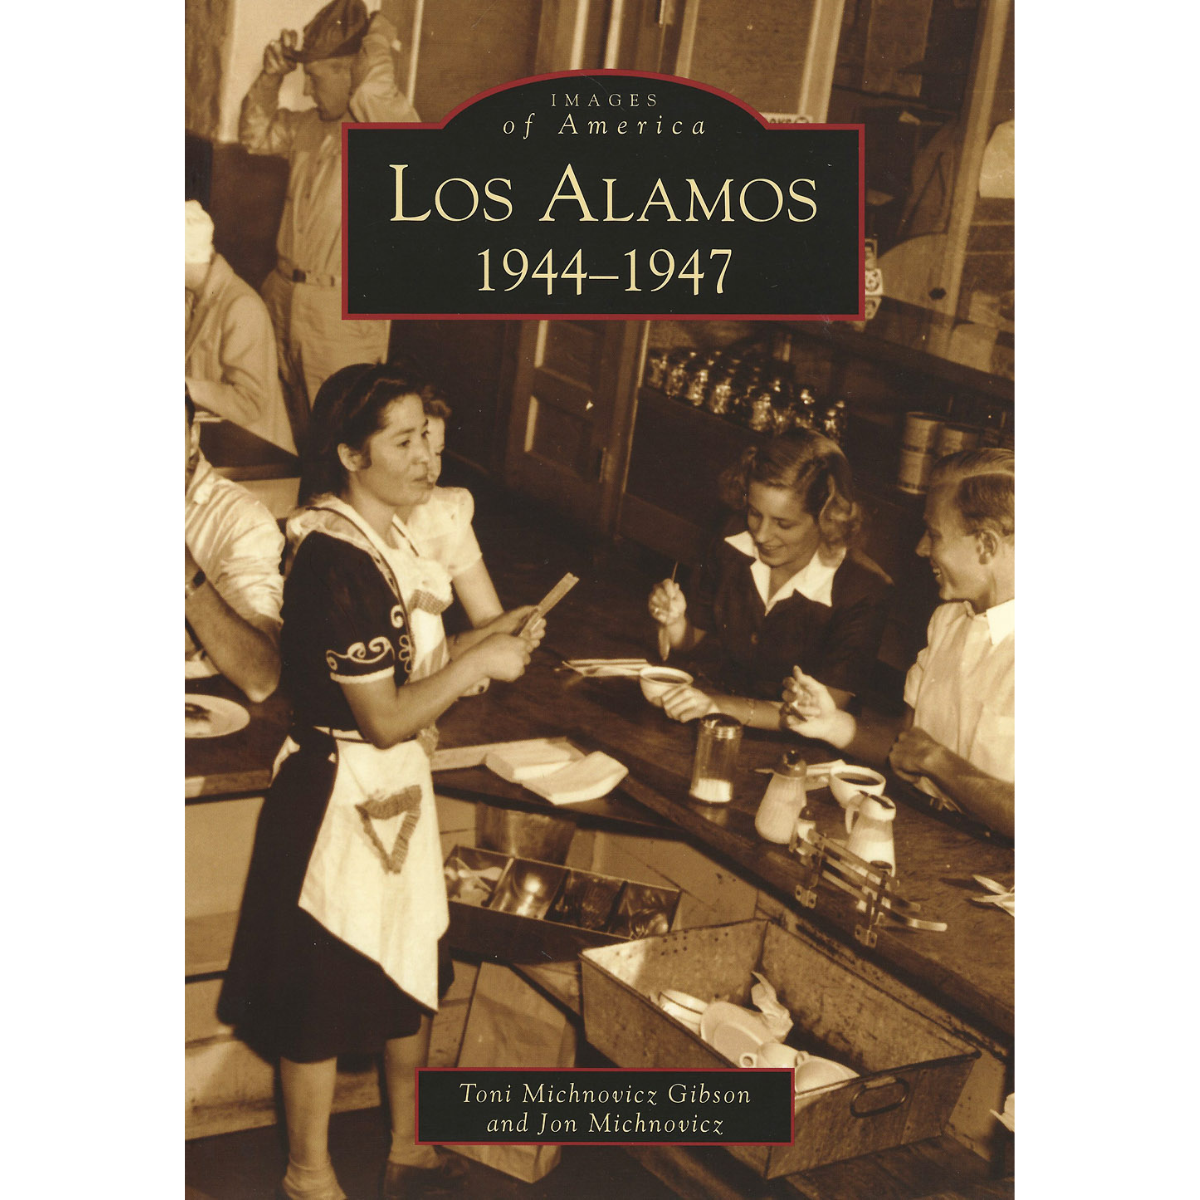 Los Alamos 1944-1947